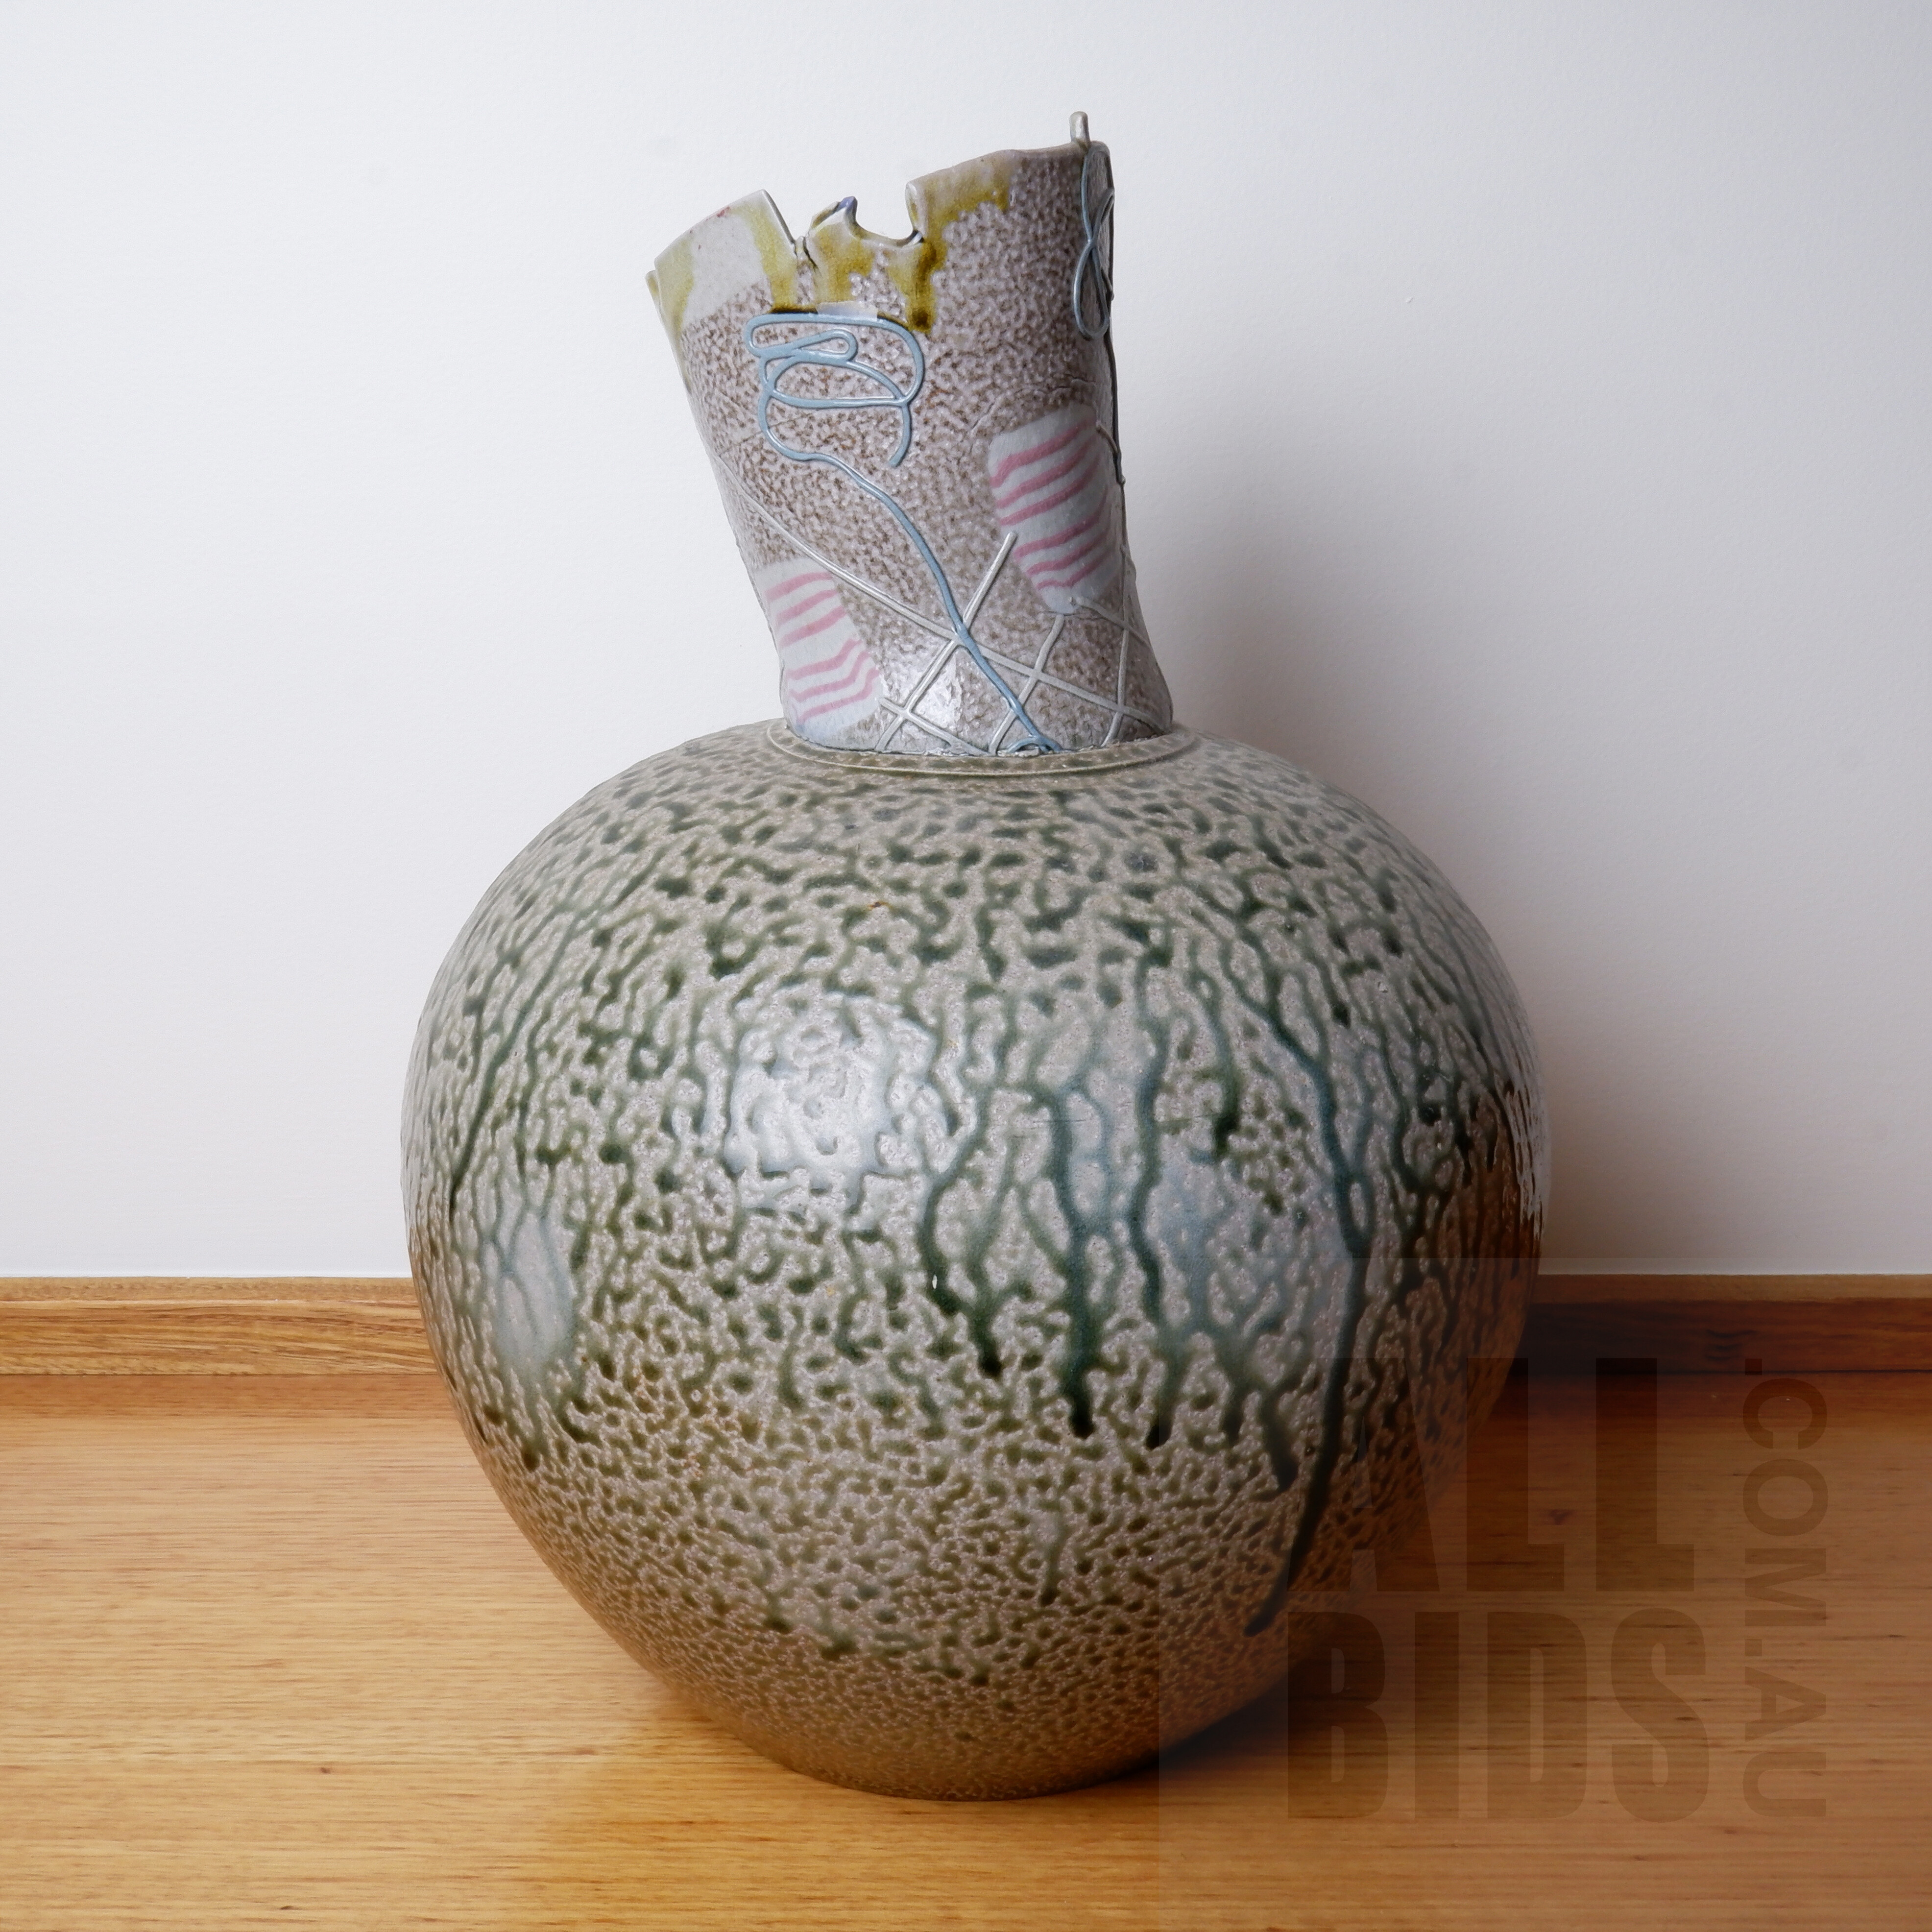 'Large Australian Studio Ceramic Bulbous Form Vase with Drip Glaze, Probably Jeff Mincham'